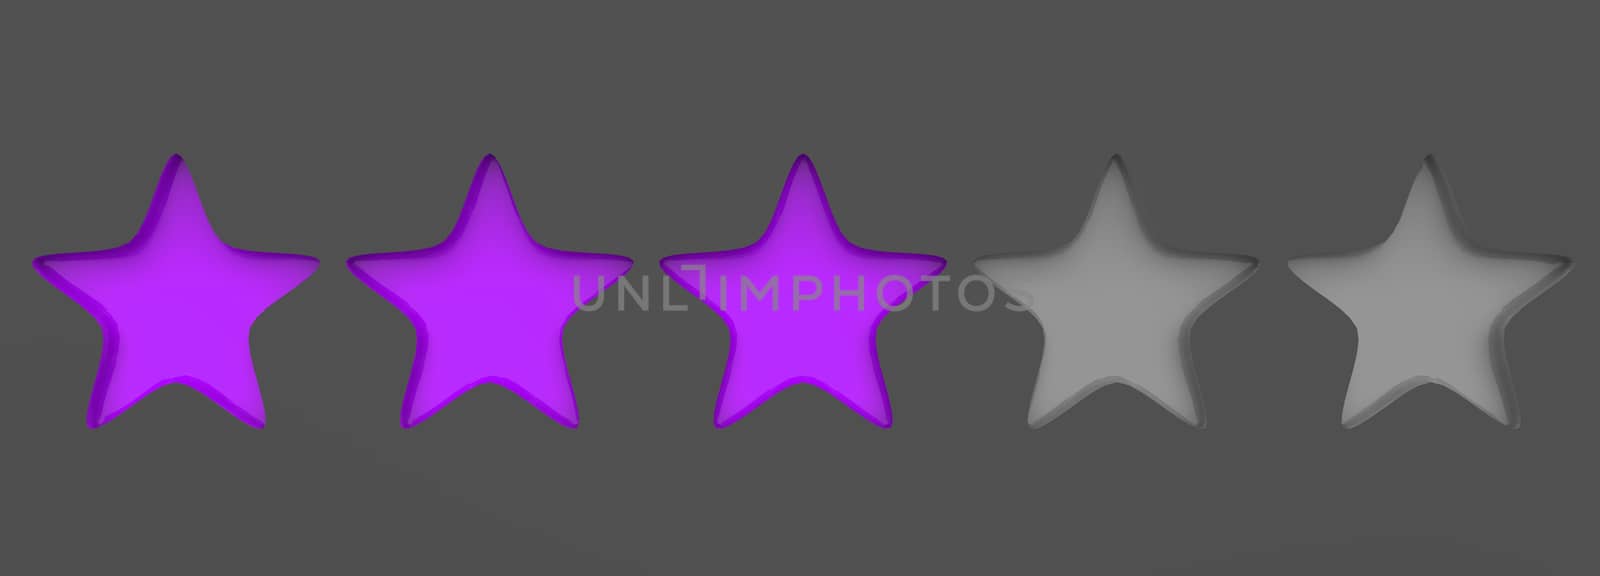 3d violet three star on color background. Render and illustration of golden star for premium